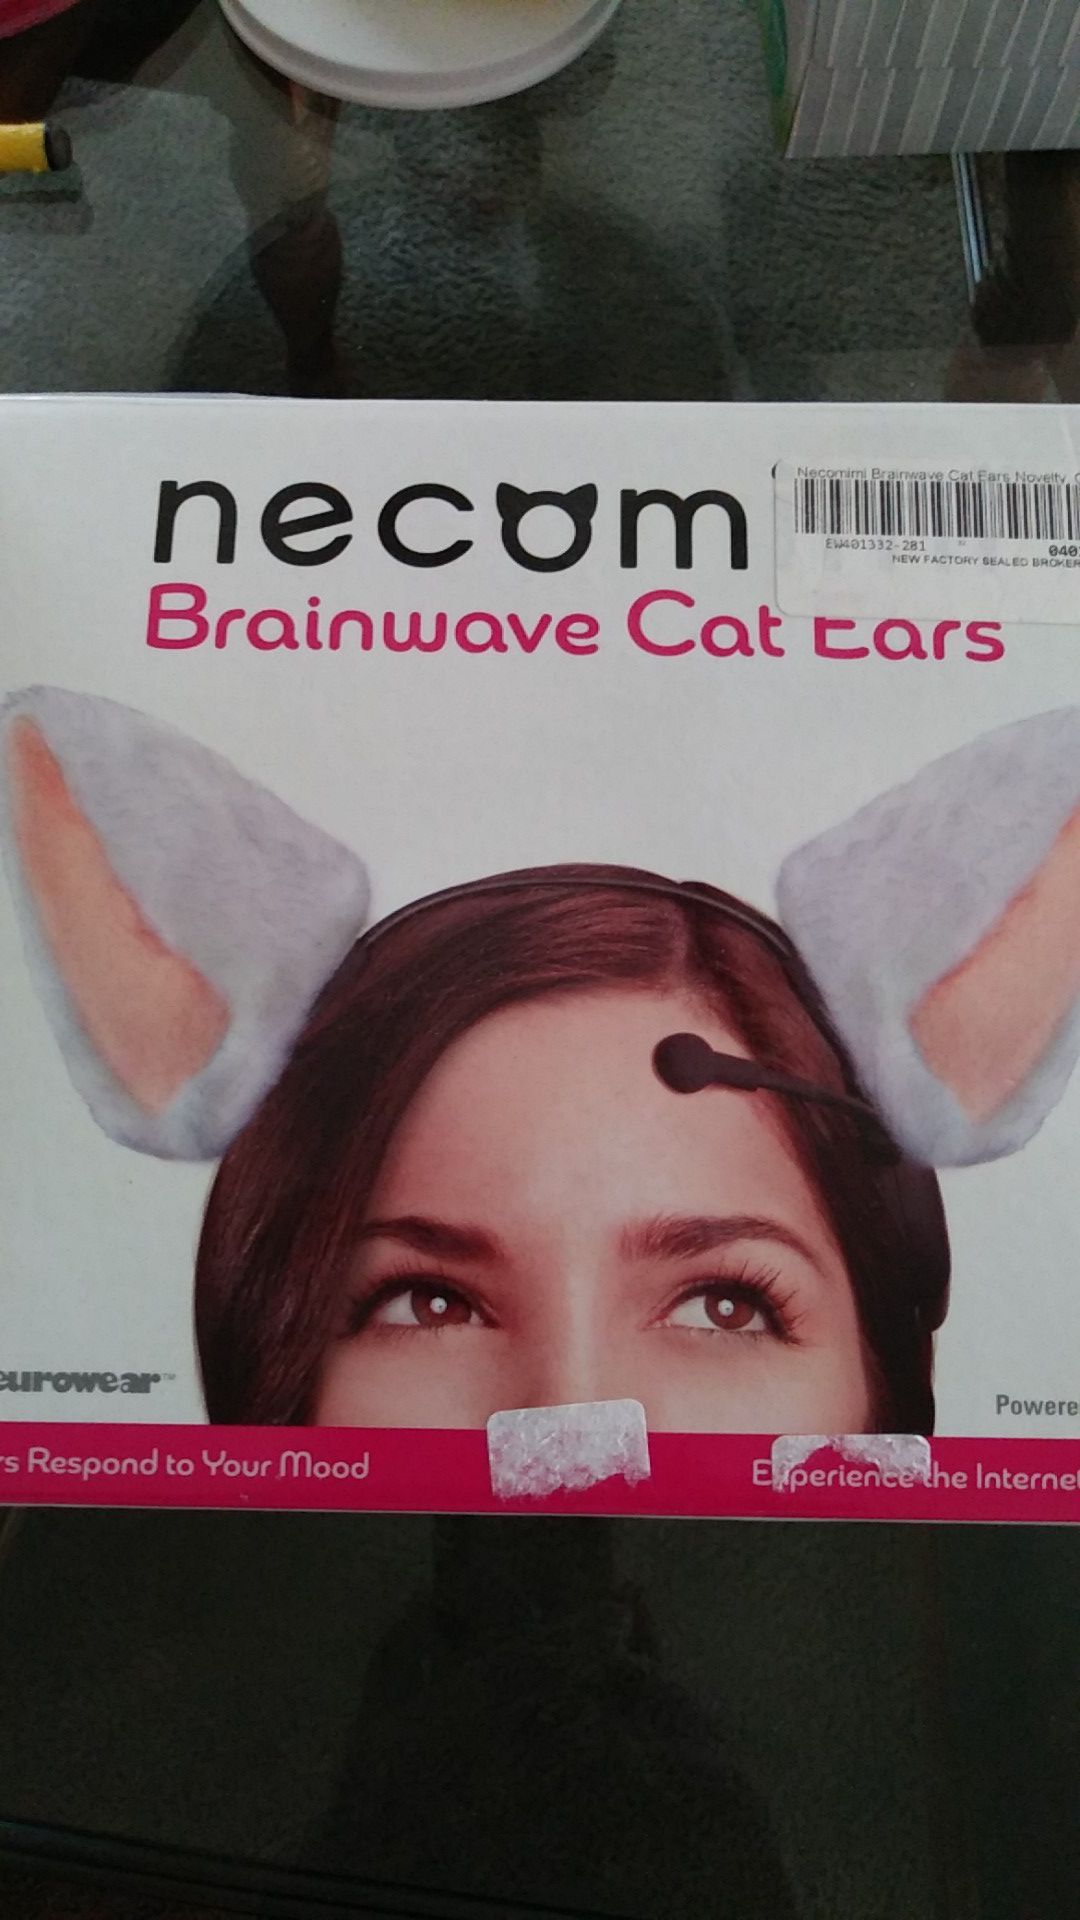 Brainwave cat ears